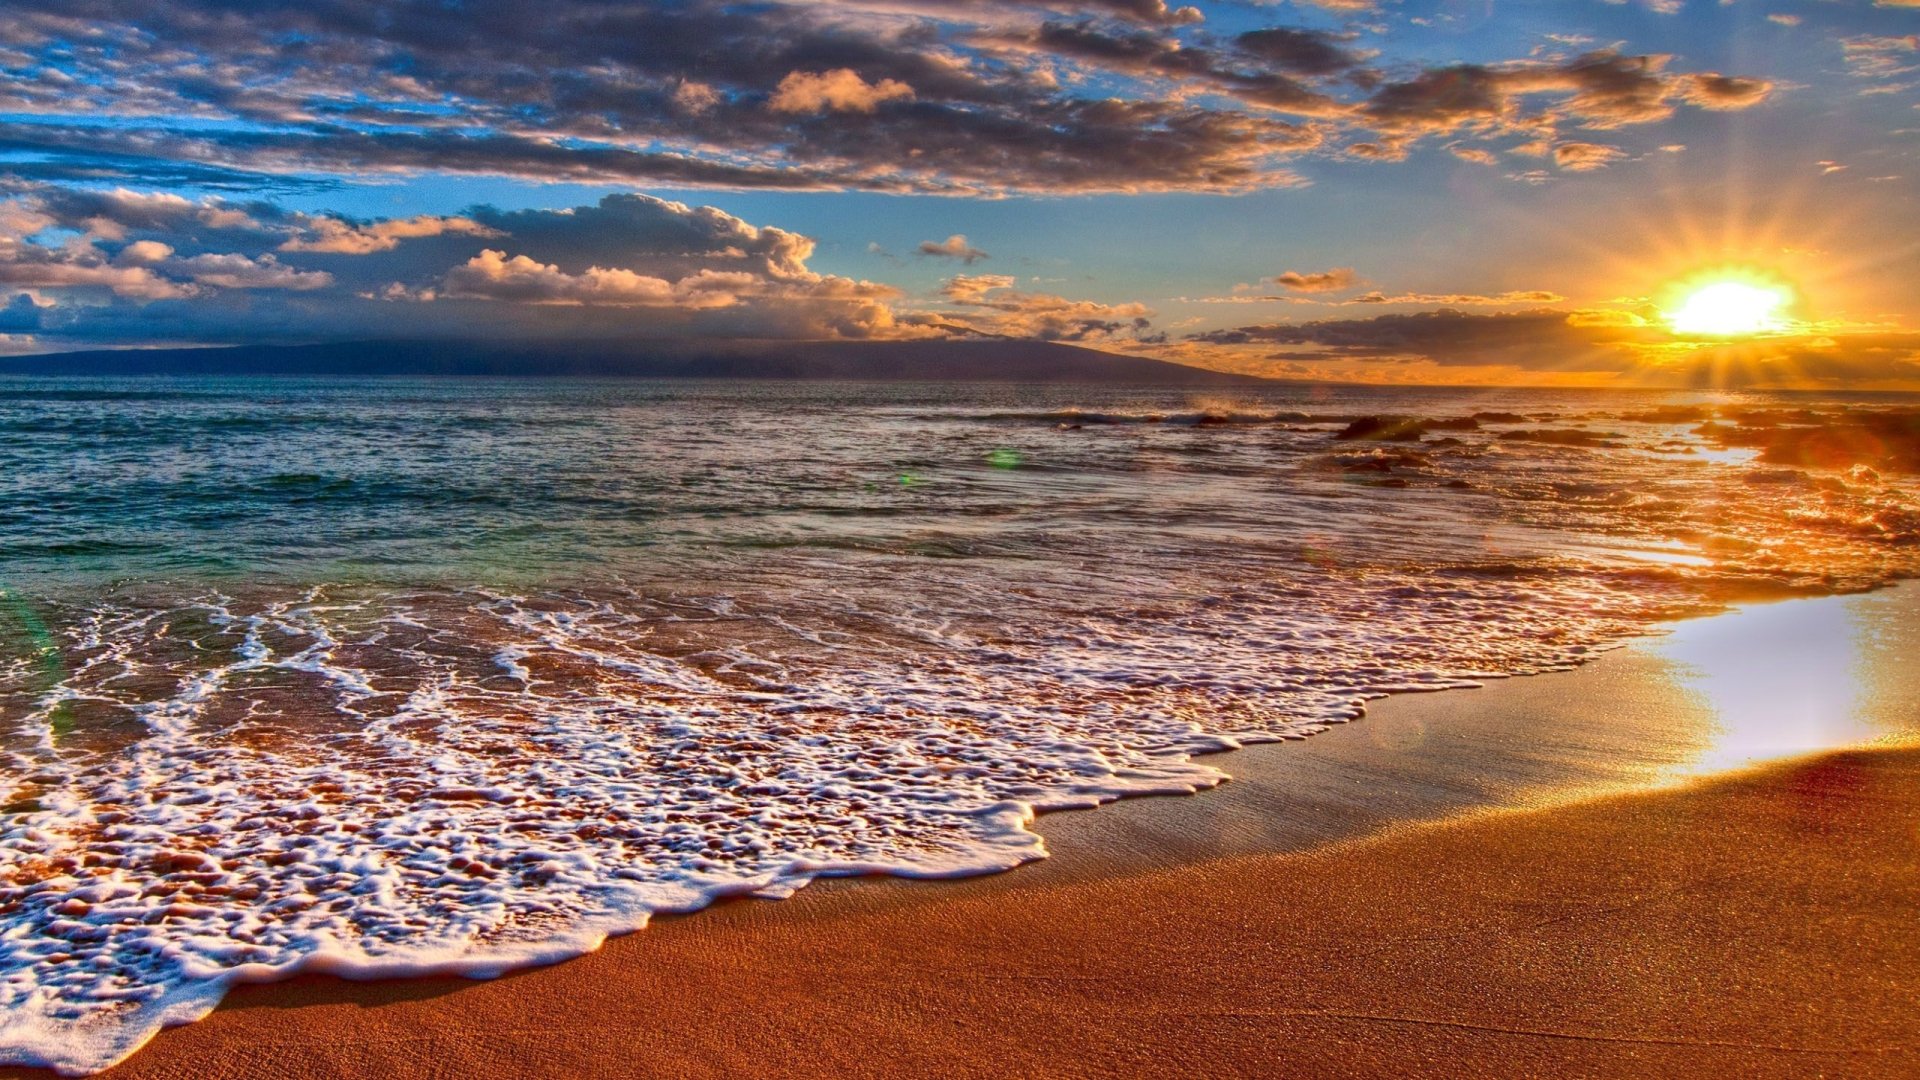 Beach Sunrise HD Wallpaper | Background Image | 2560x1440 | ID:490506 - Wallpaper Abyss